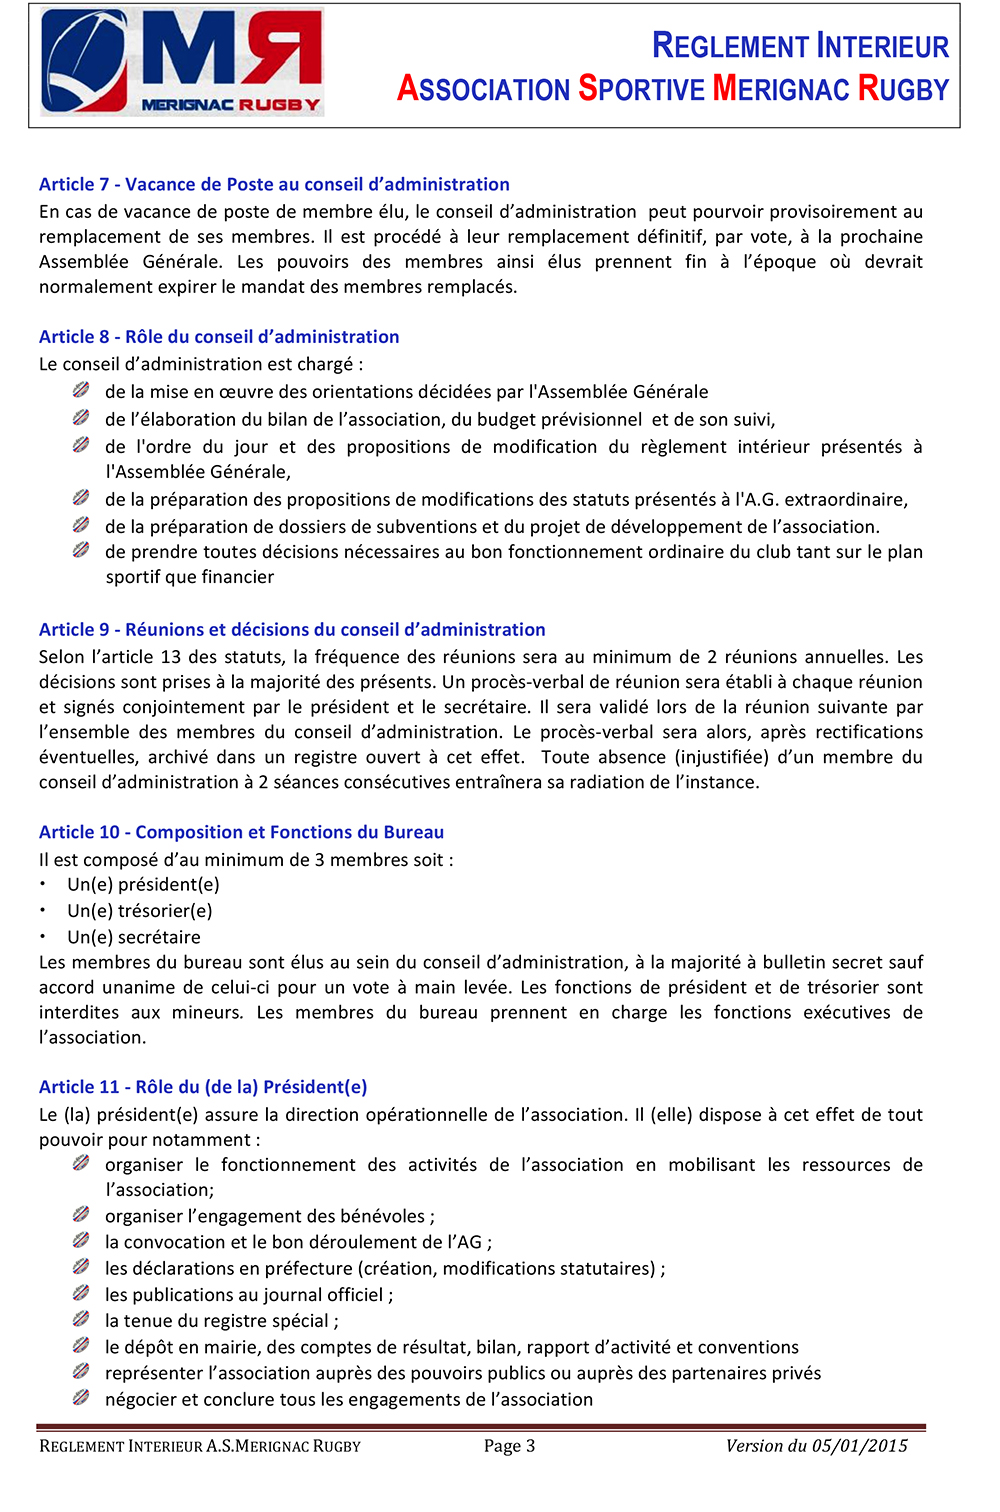 Microsoft Word - Reglement interieur ASMR_05012015-1.doc